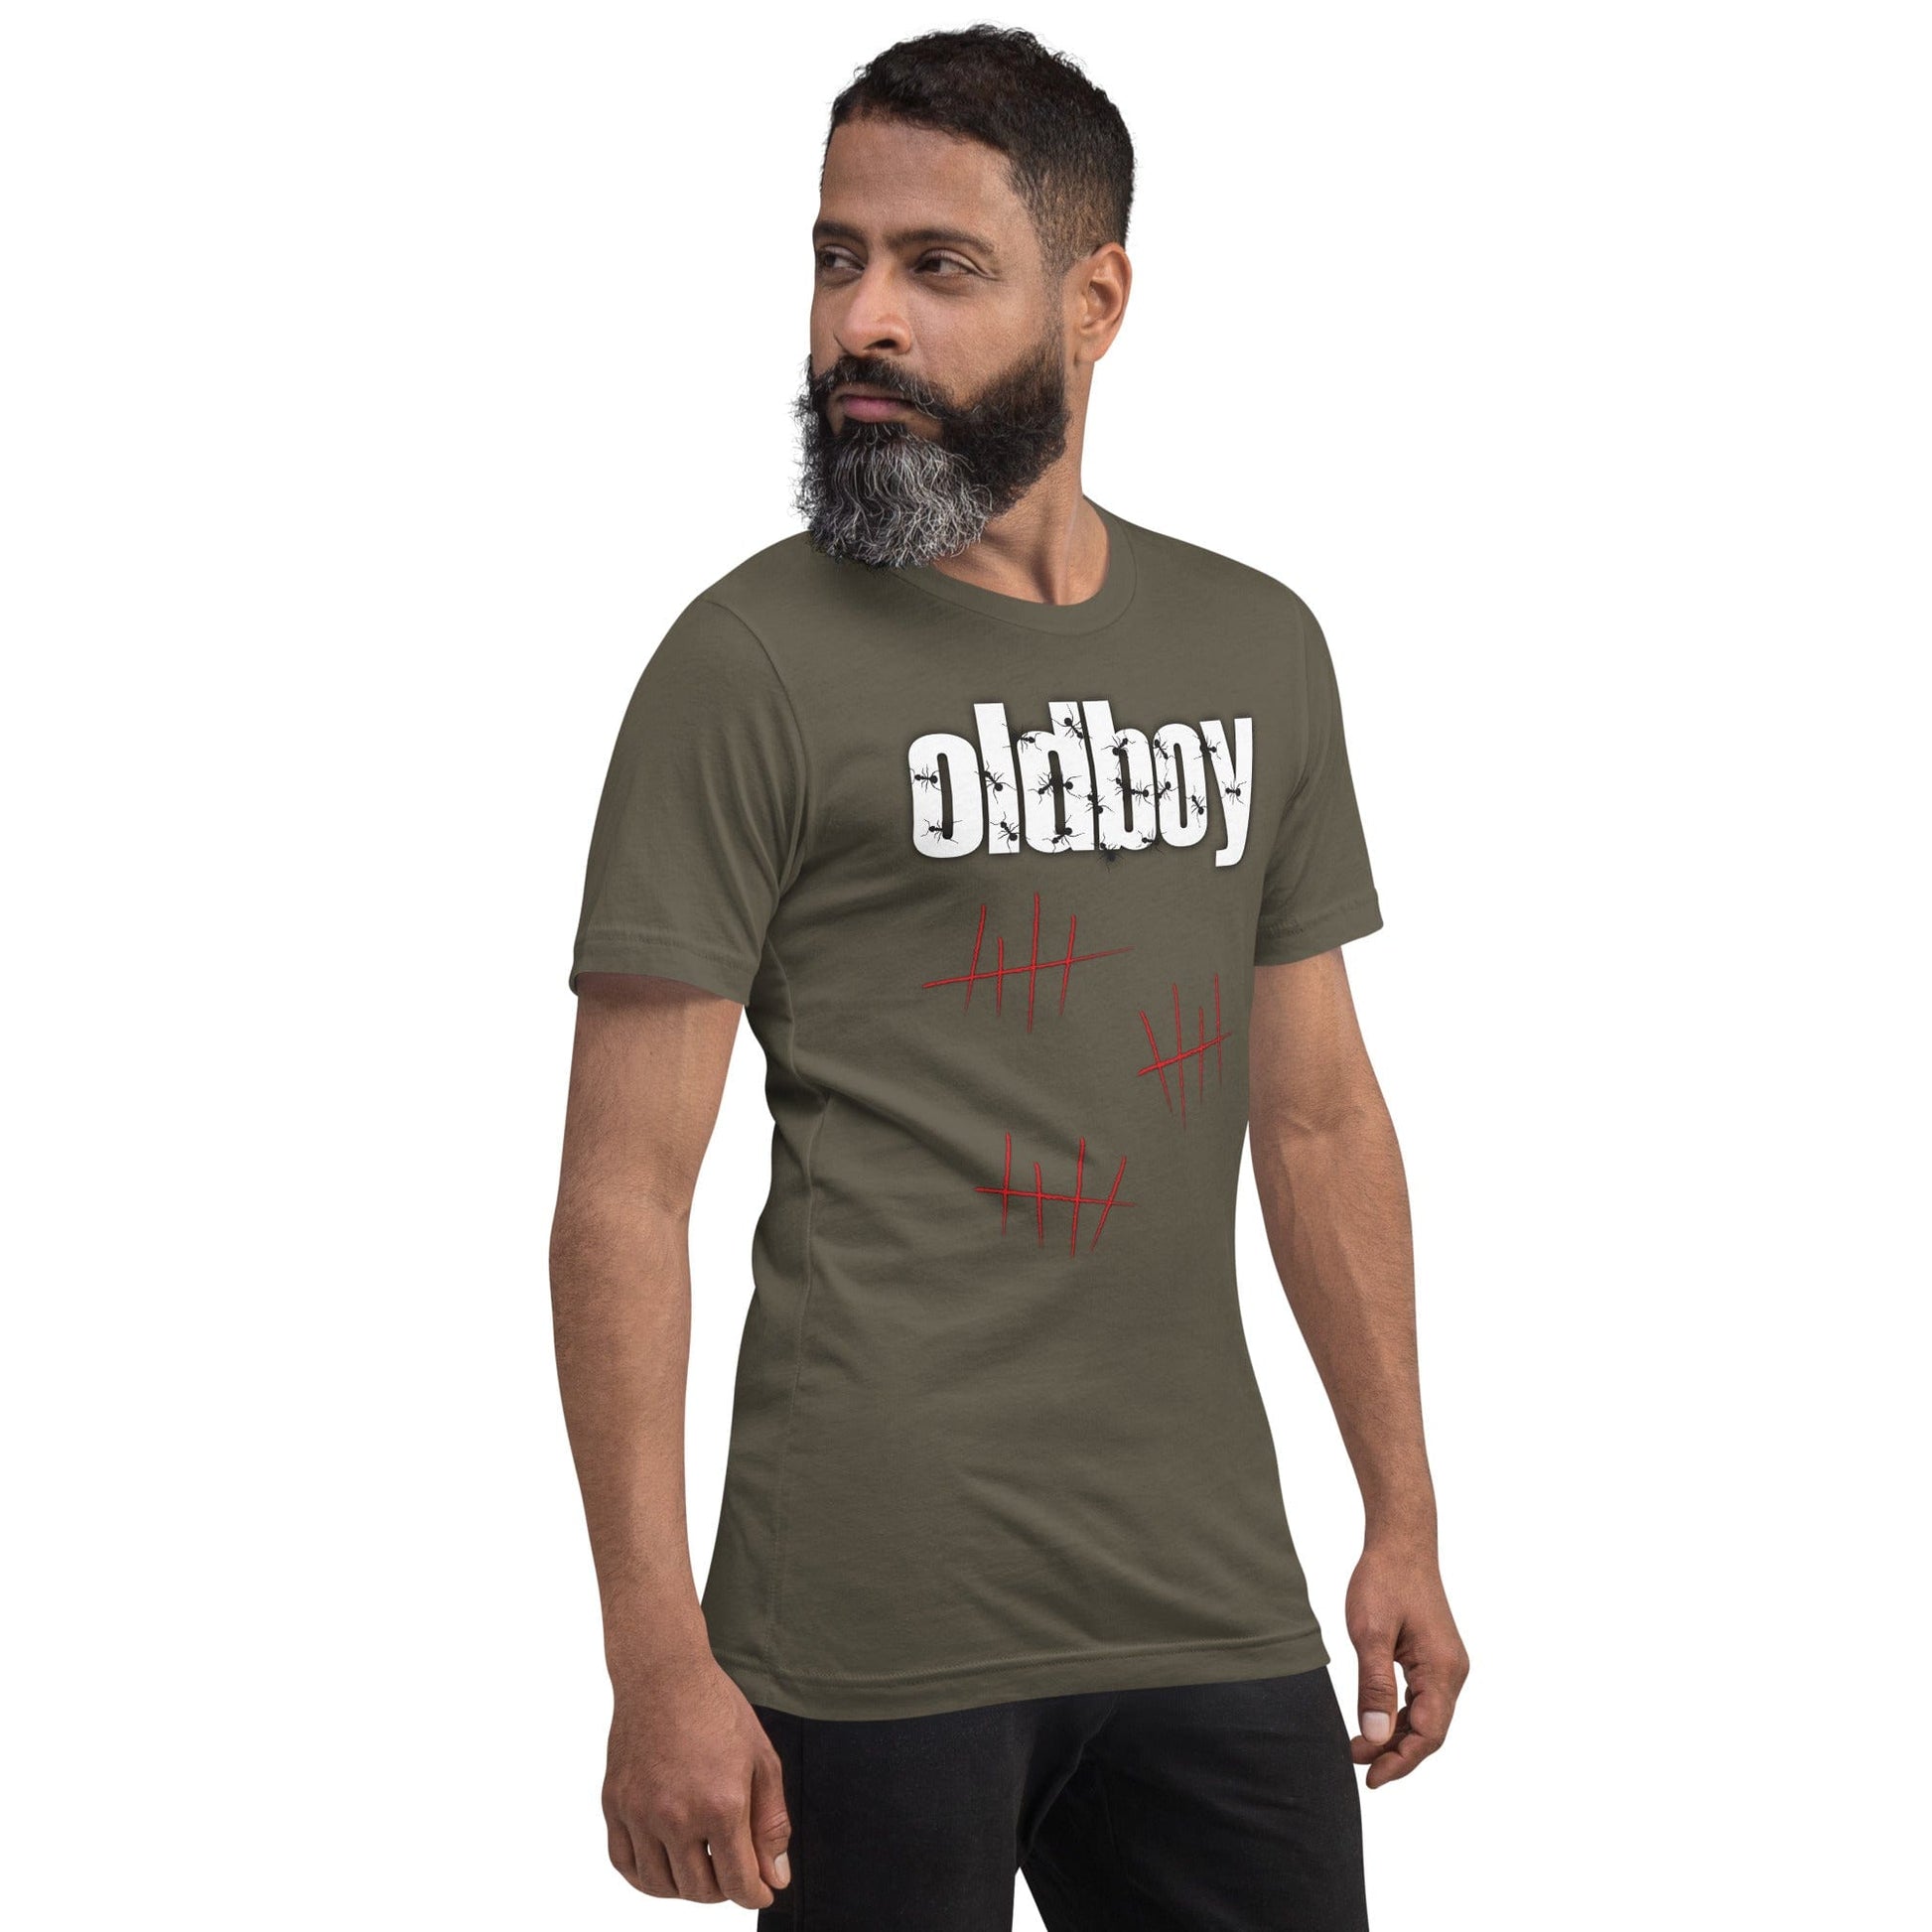 Oldboy Ants T-shirt